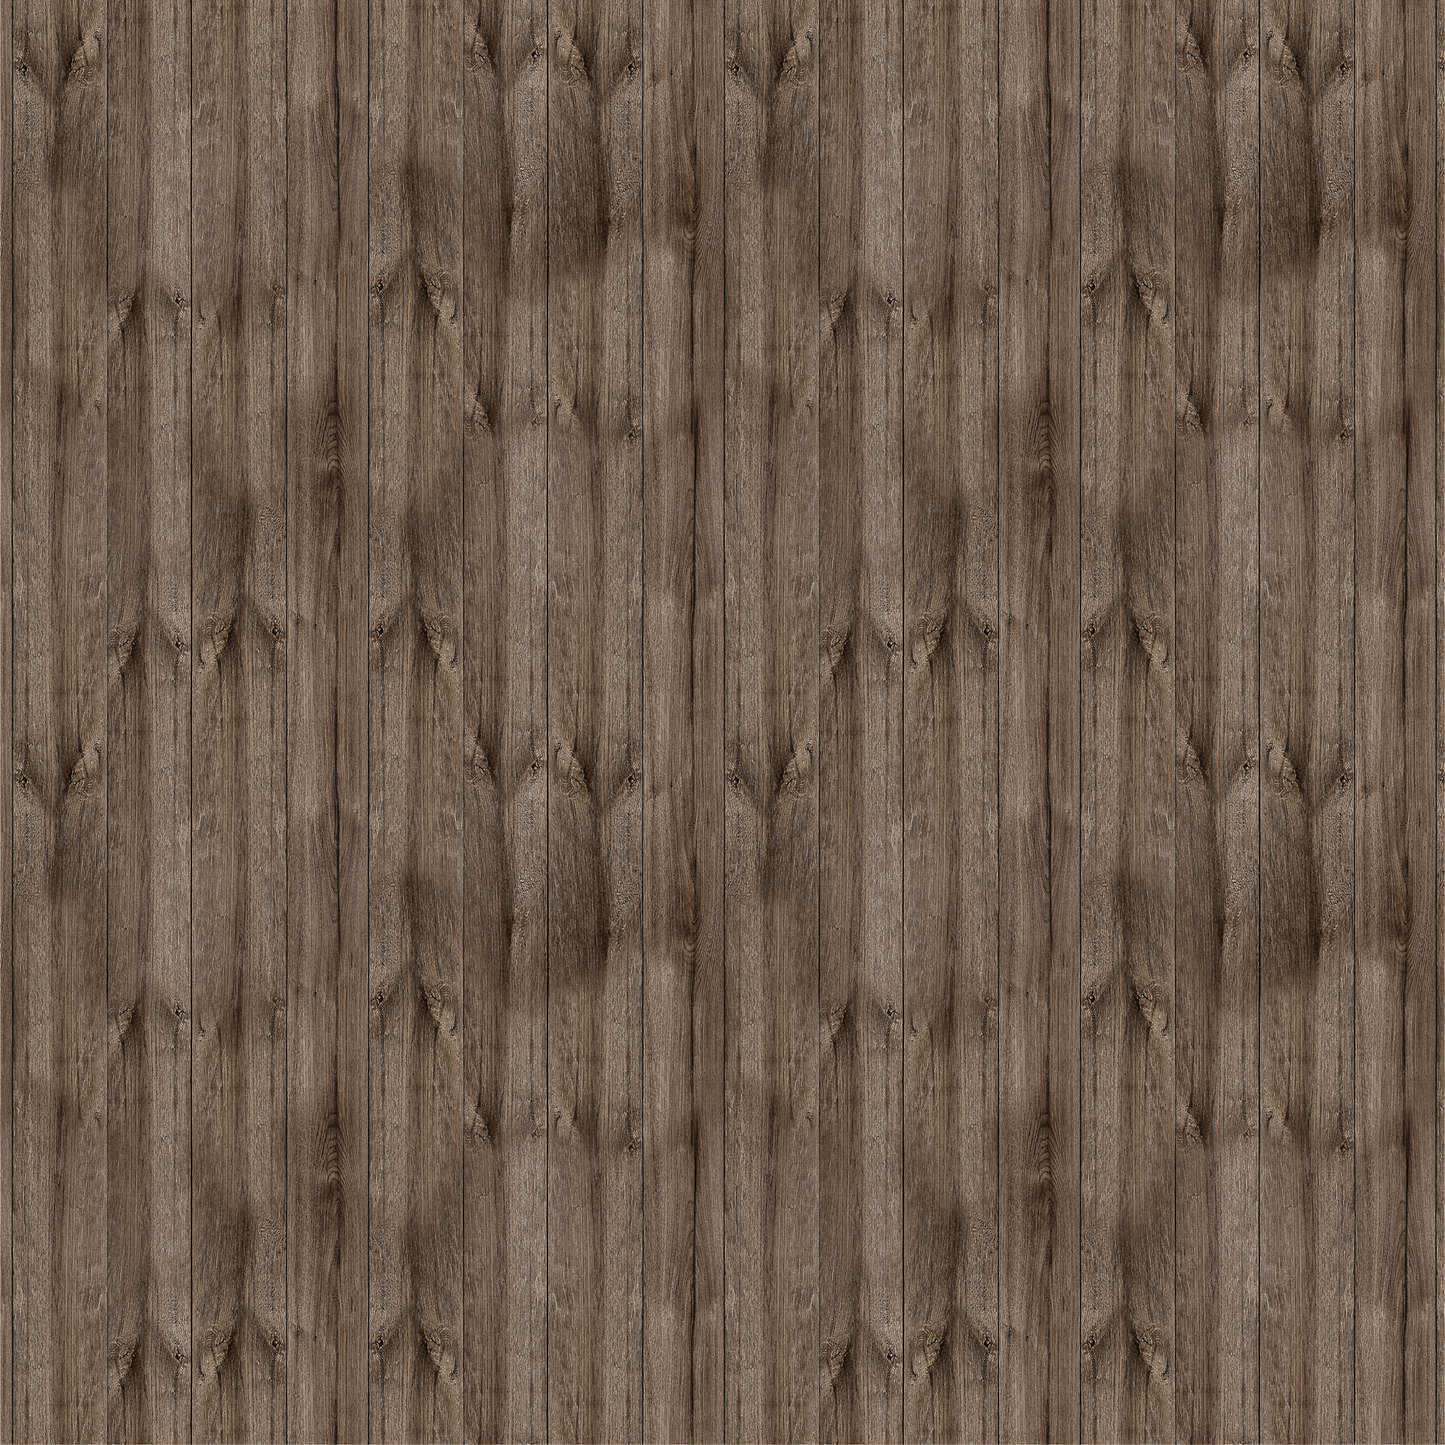 Wooden Boards 003